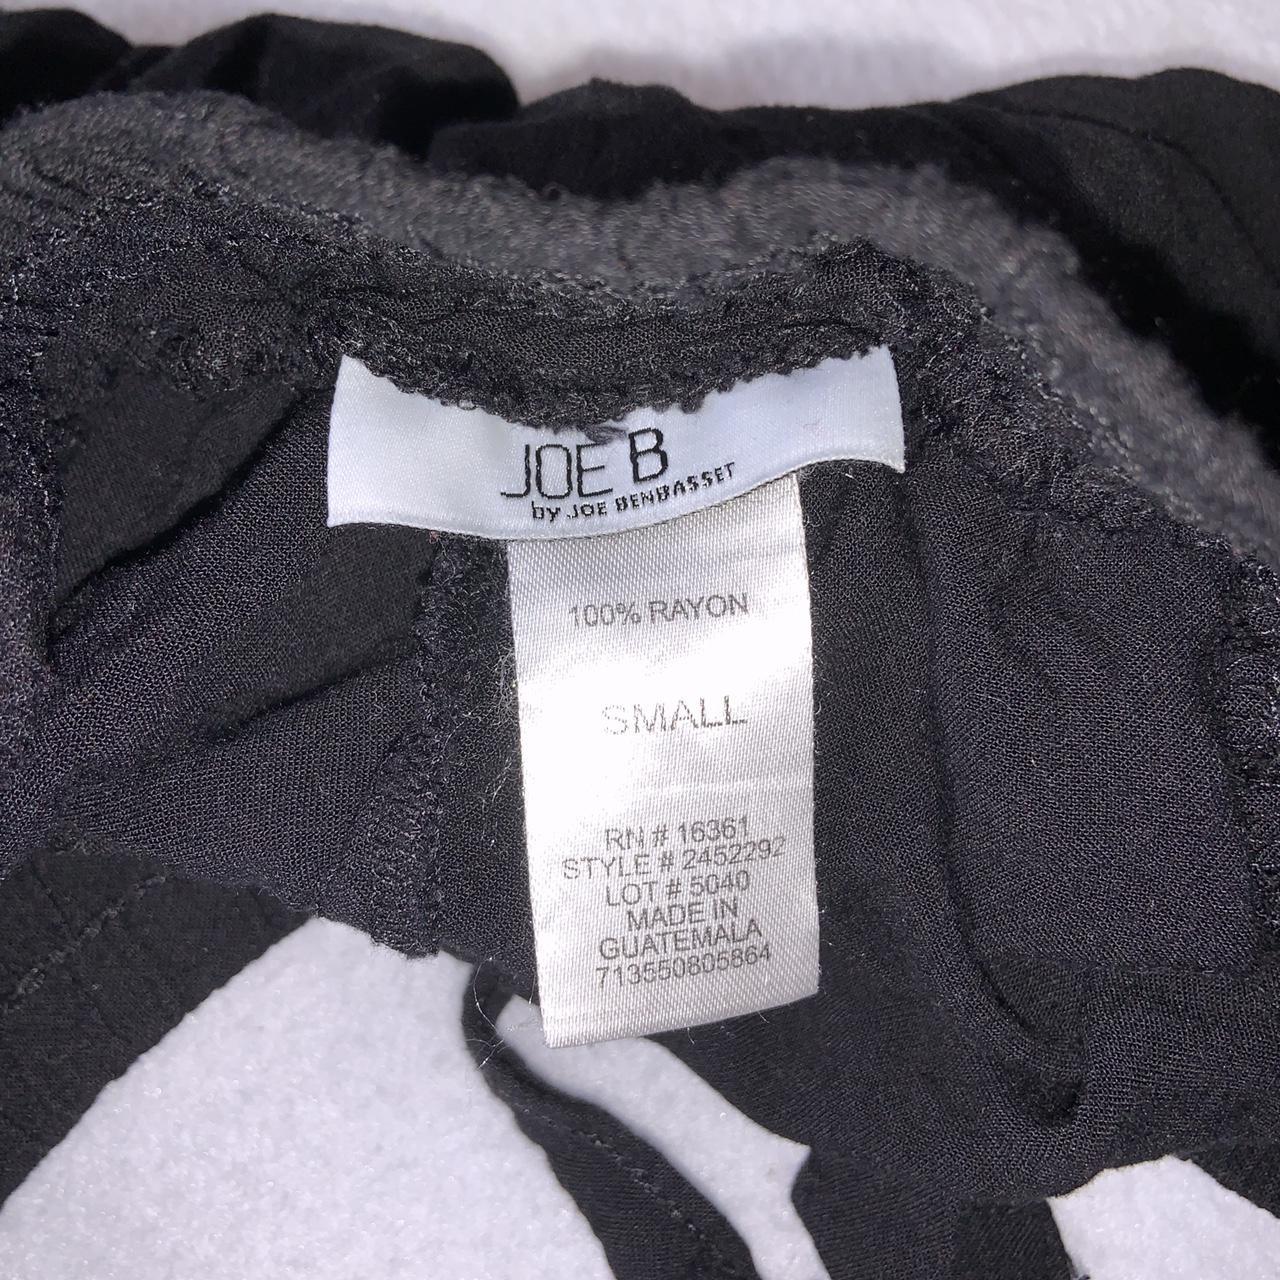 Product Image 2 - black thin shorts
size: small 
brand: